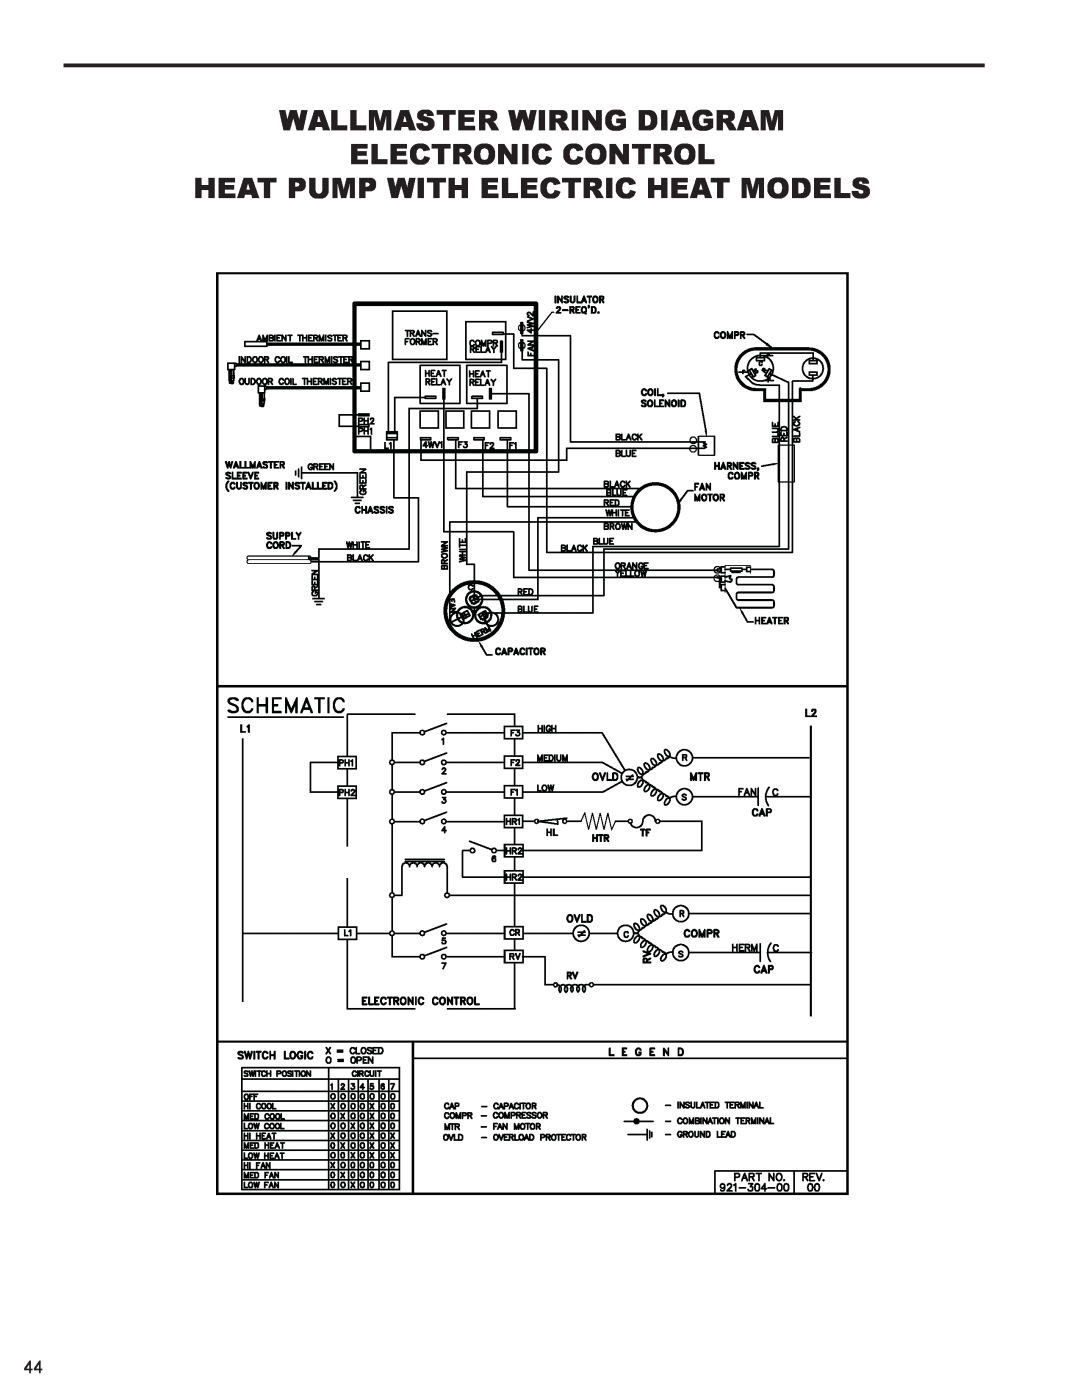 Friedrich WS10B10 service manual Heat Pump With Electric Heat Models, Wallmaster Wiring Diagram Electronic Control 